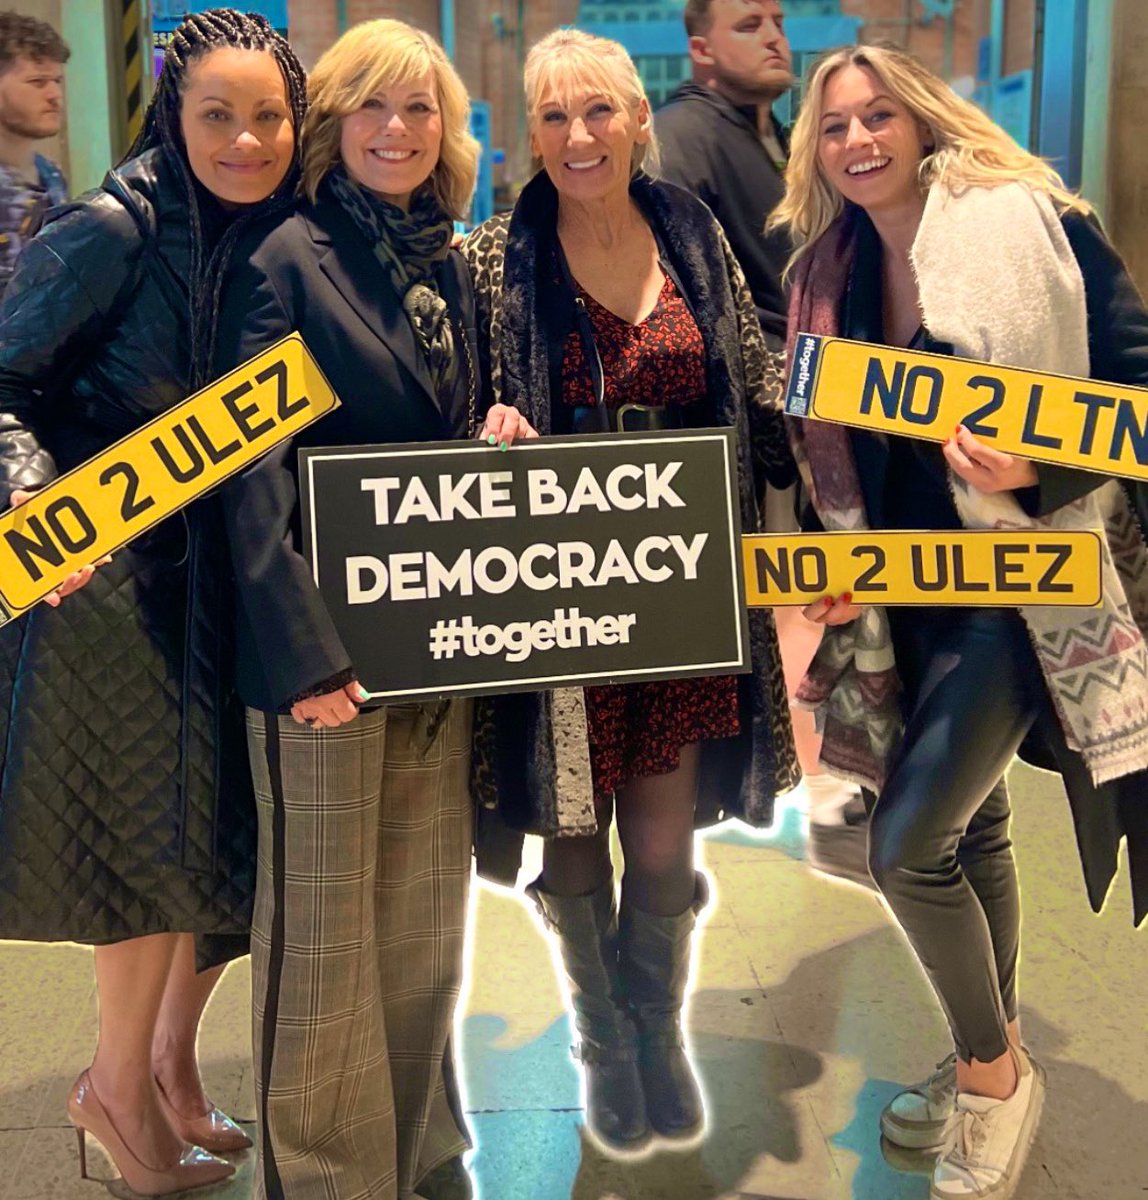 READ
THE
SIGNS

We 👊🏾 Say 👊🏾 No 🔥

#NoToULEZ #NoToLTN #TakeBackDemocracy #LadiesNight

@charlottehodson6 @IngridTarrant1 @MsGlynisBarber 
@Togetherdec